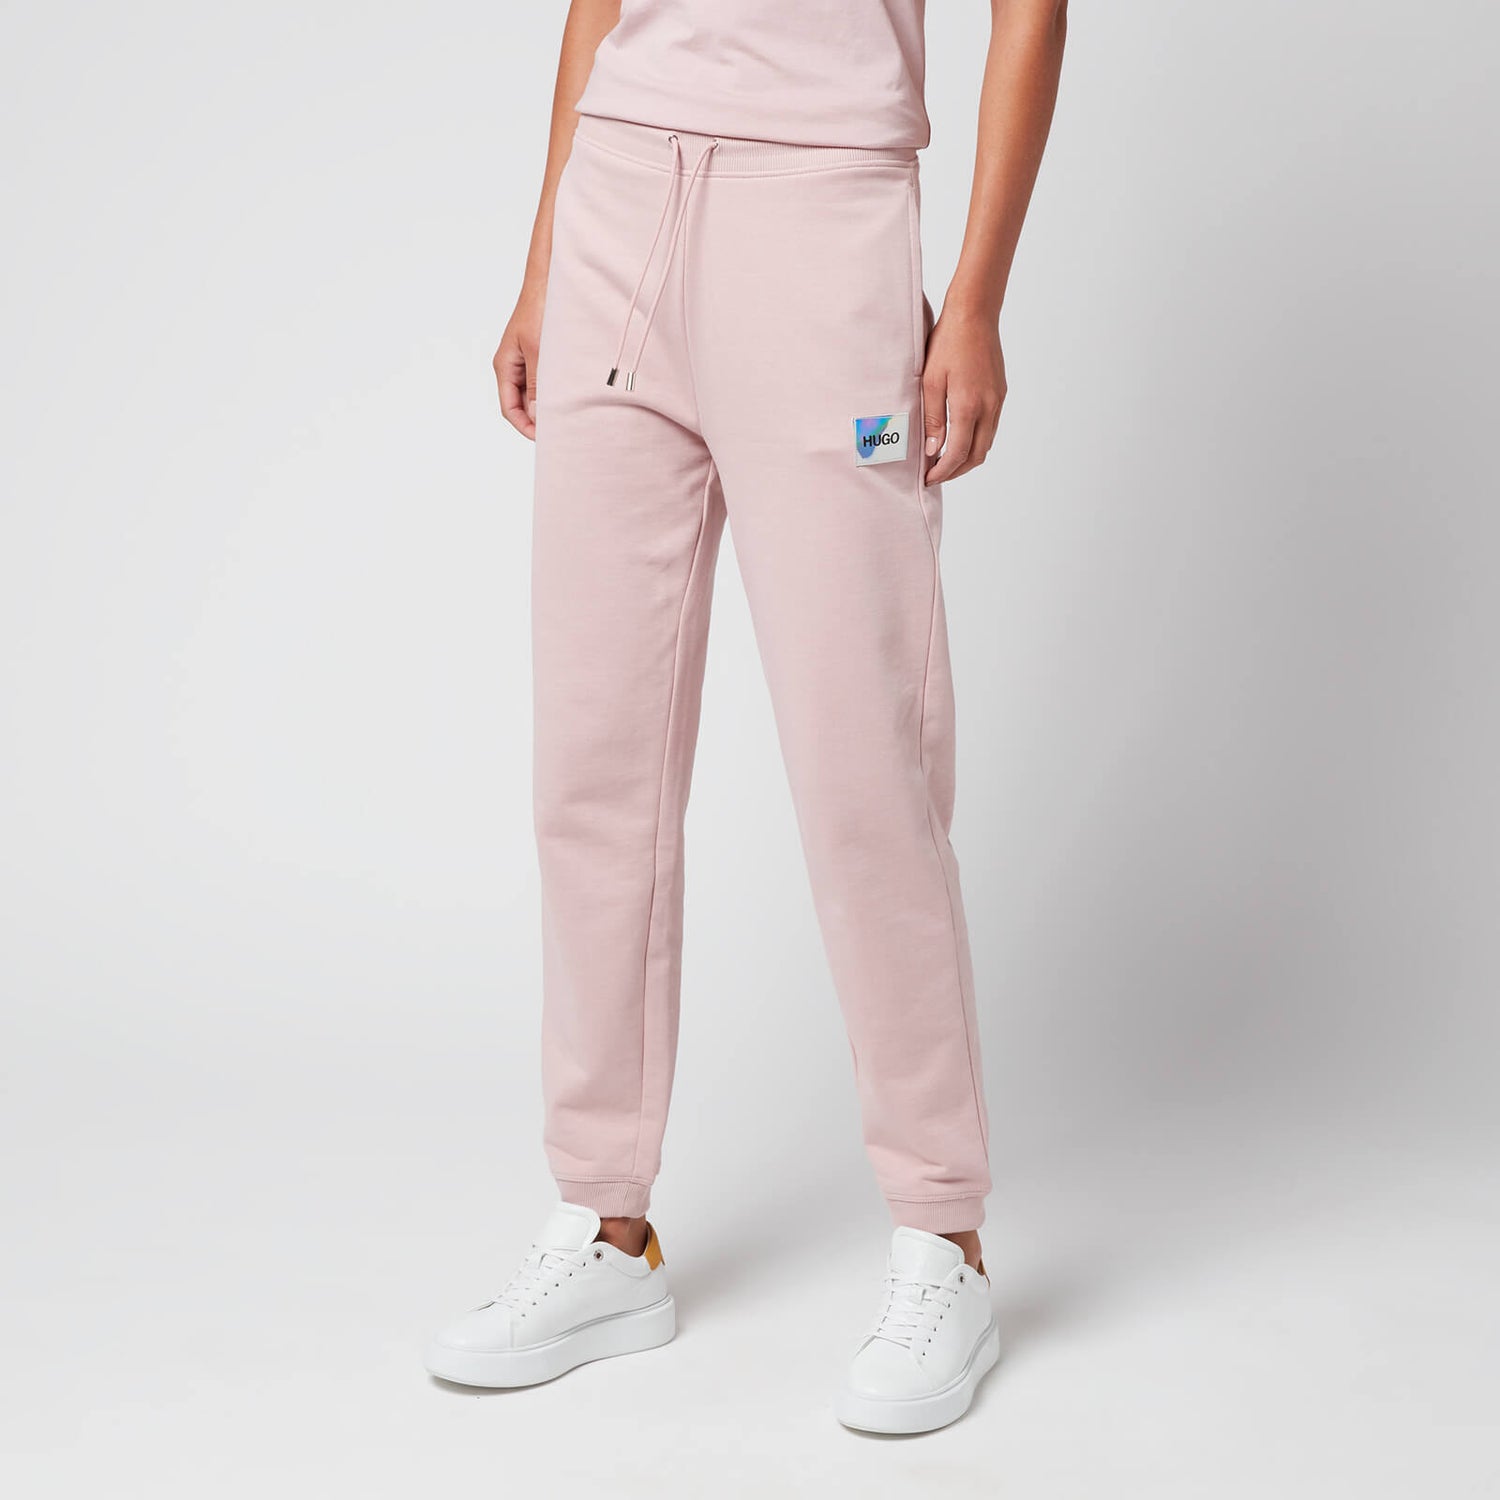 HUGO Women's Red Label Dachibi Sweatpants - Light/Pastel Pink - M